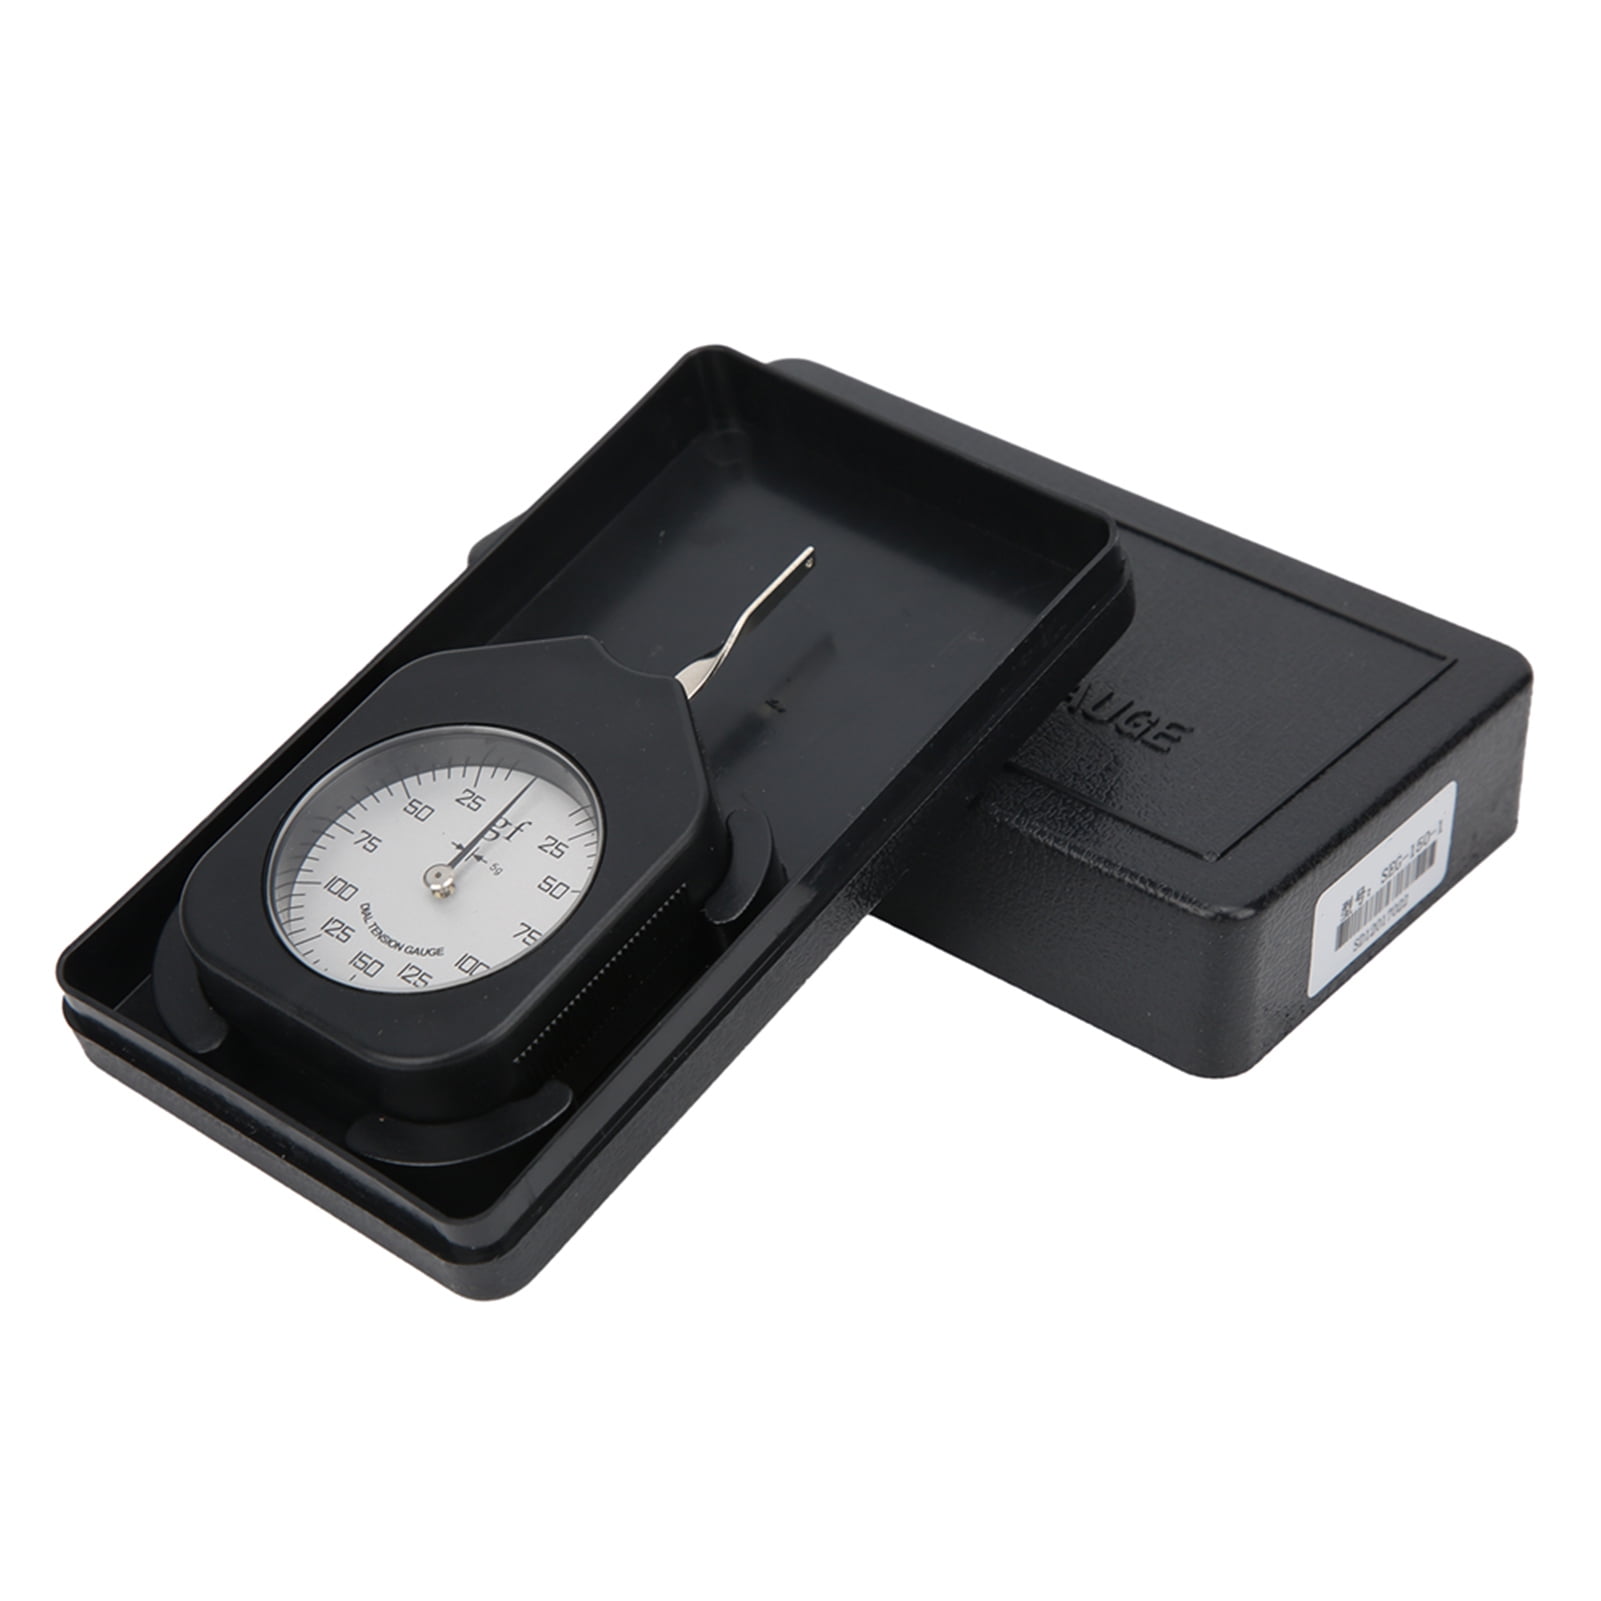 Dial Tension Meter Gauge Meter Tensionmeter Tester Needle Type with Max Measuring Value 300g 